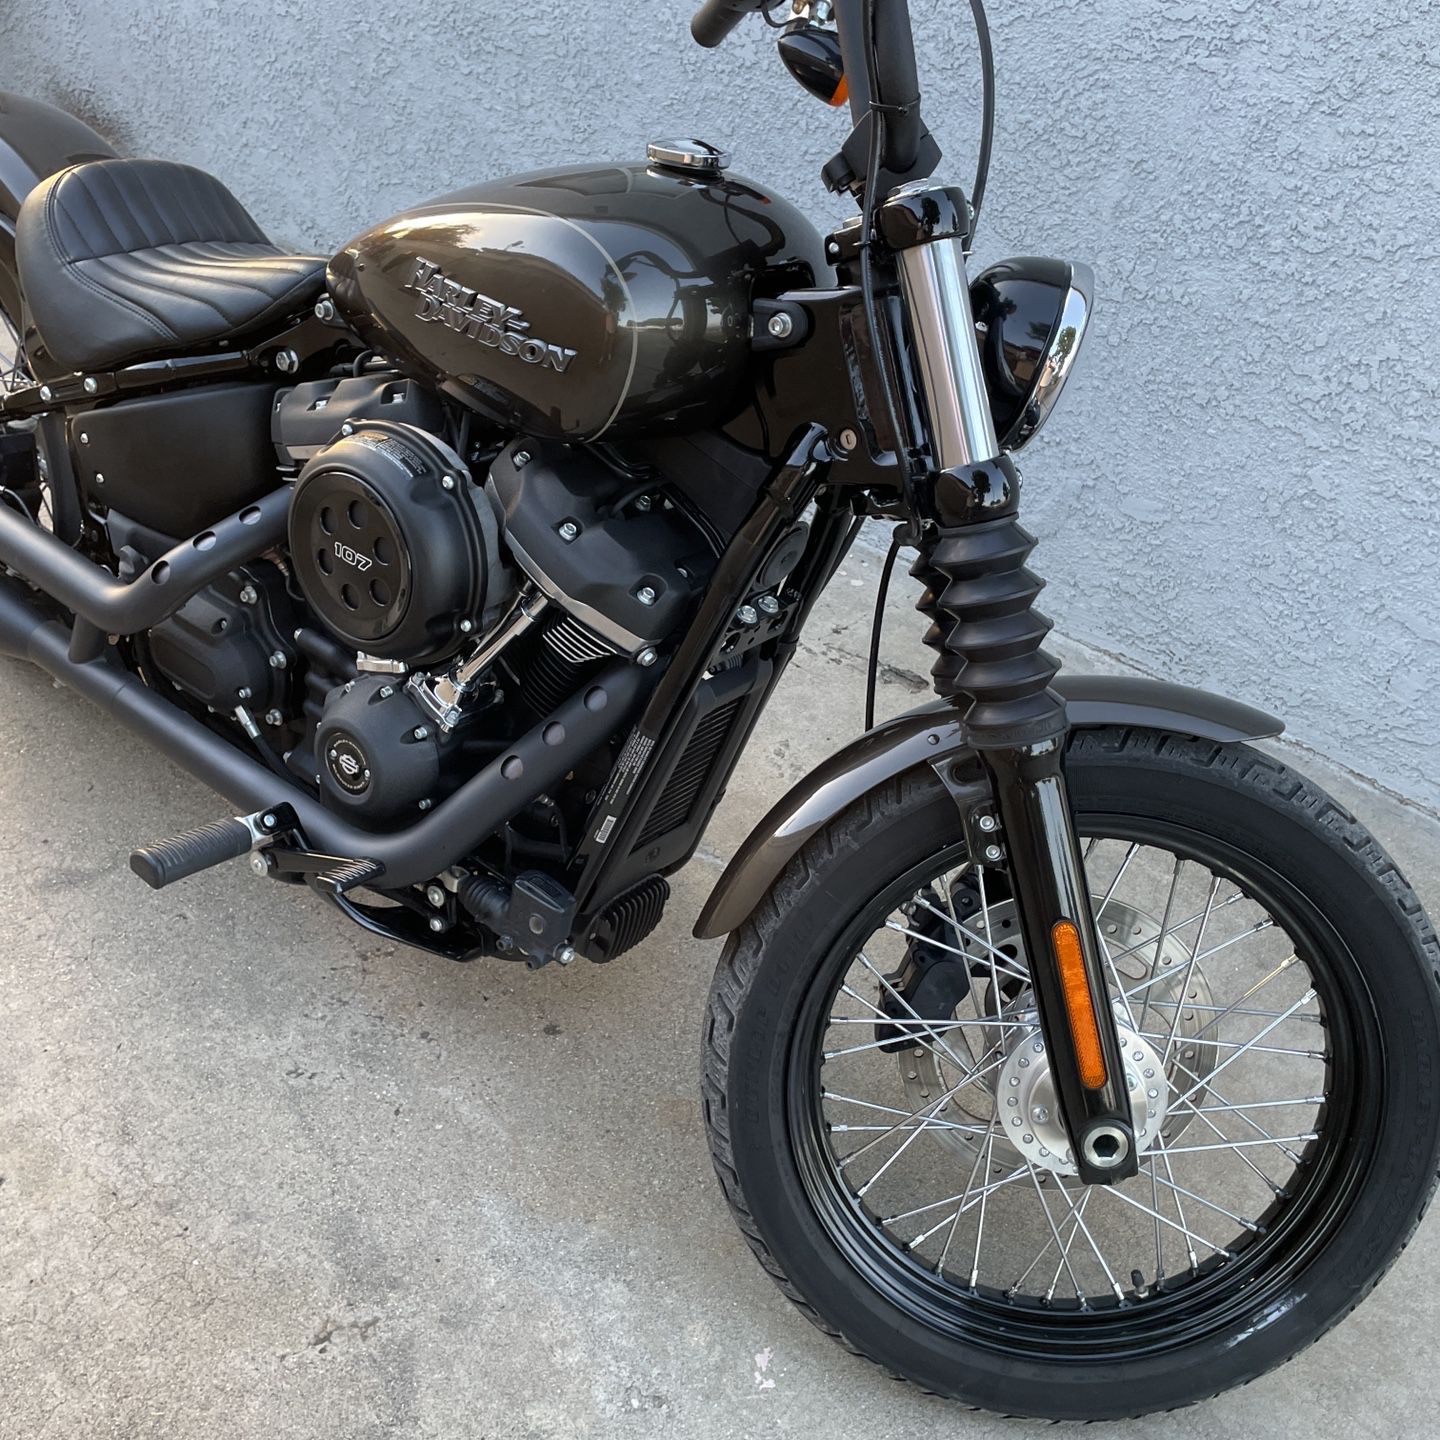 2020 Harley Davidson FxBB street bob